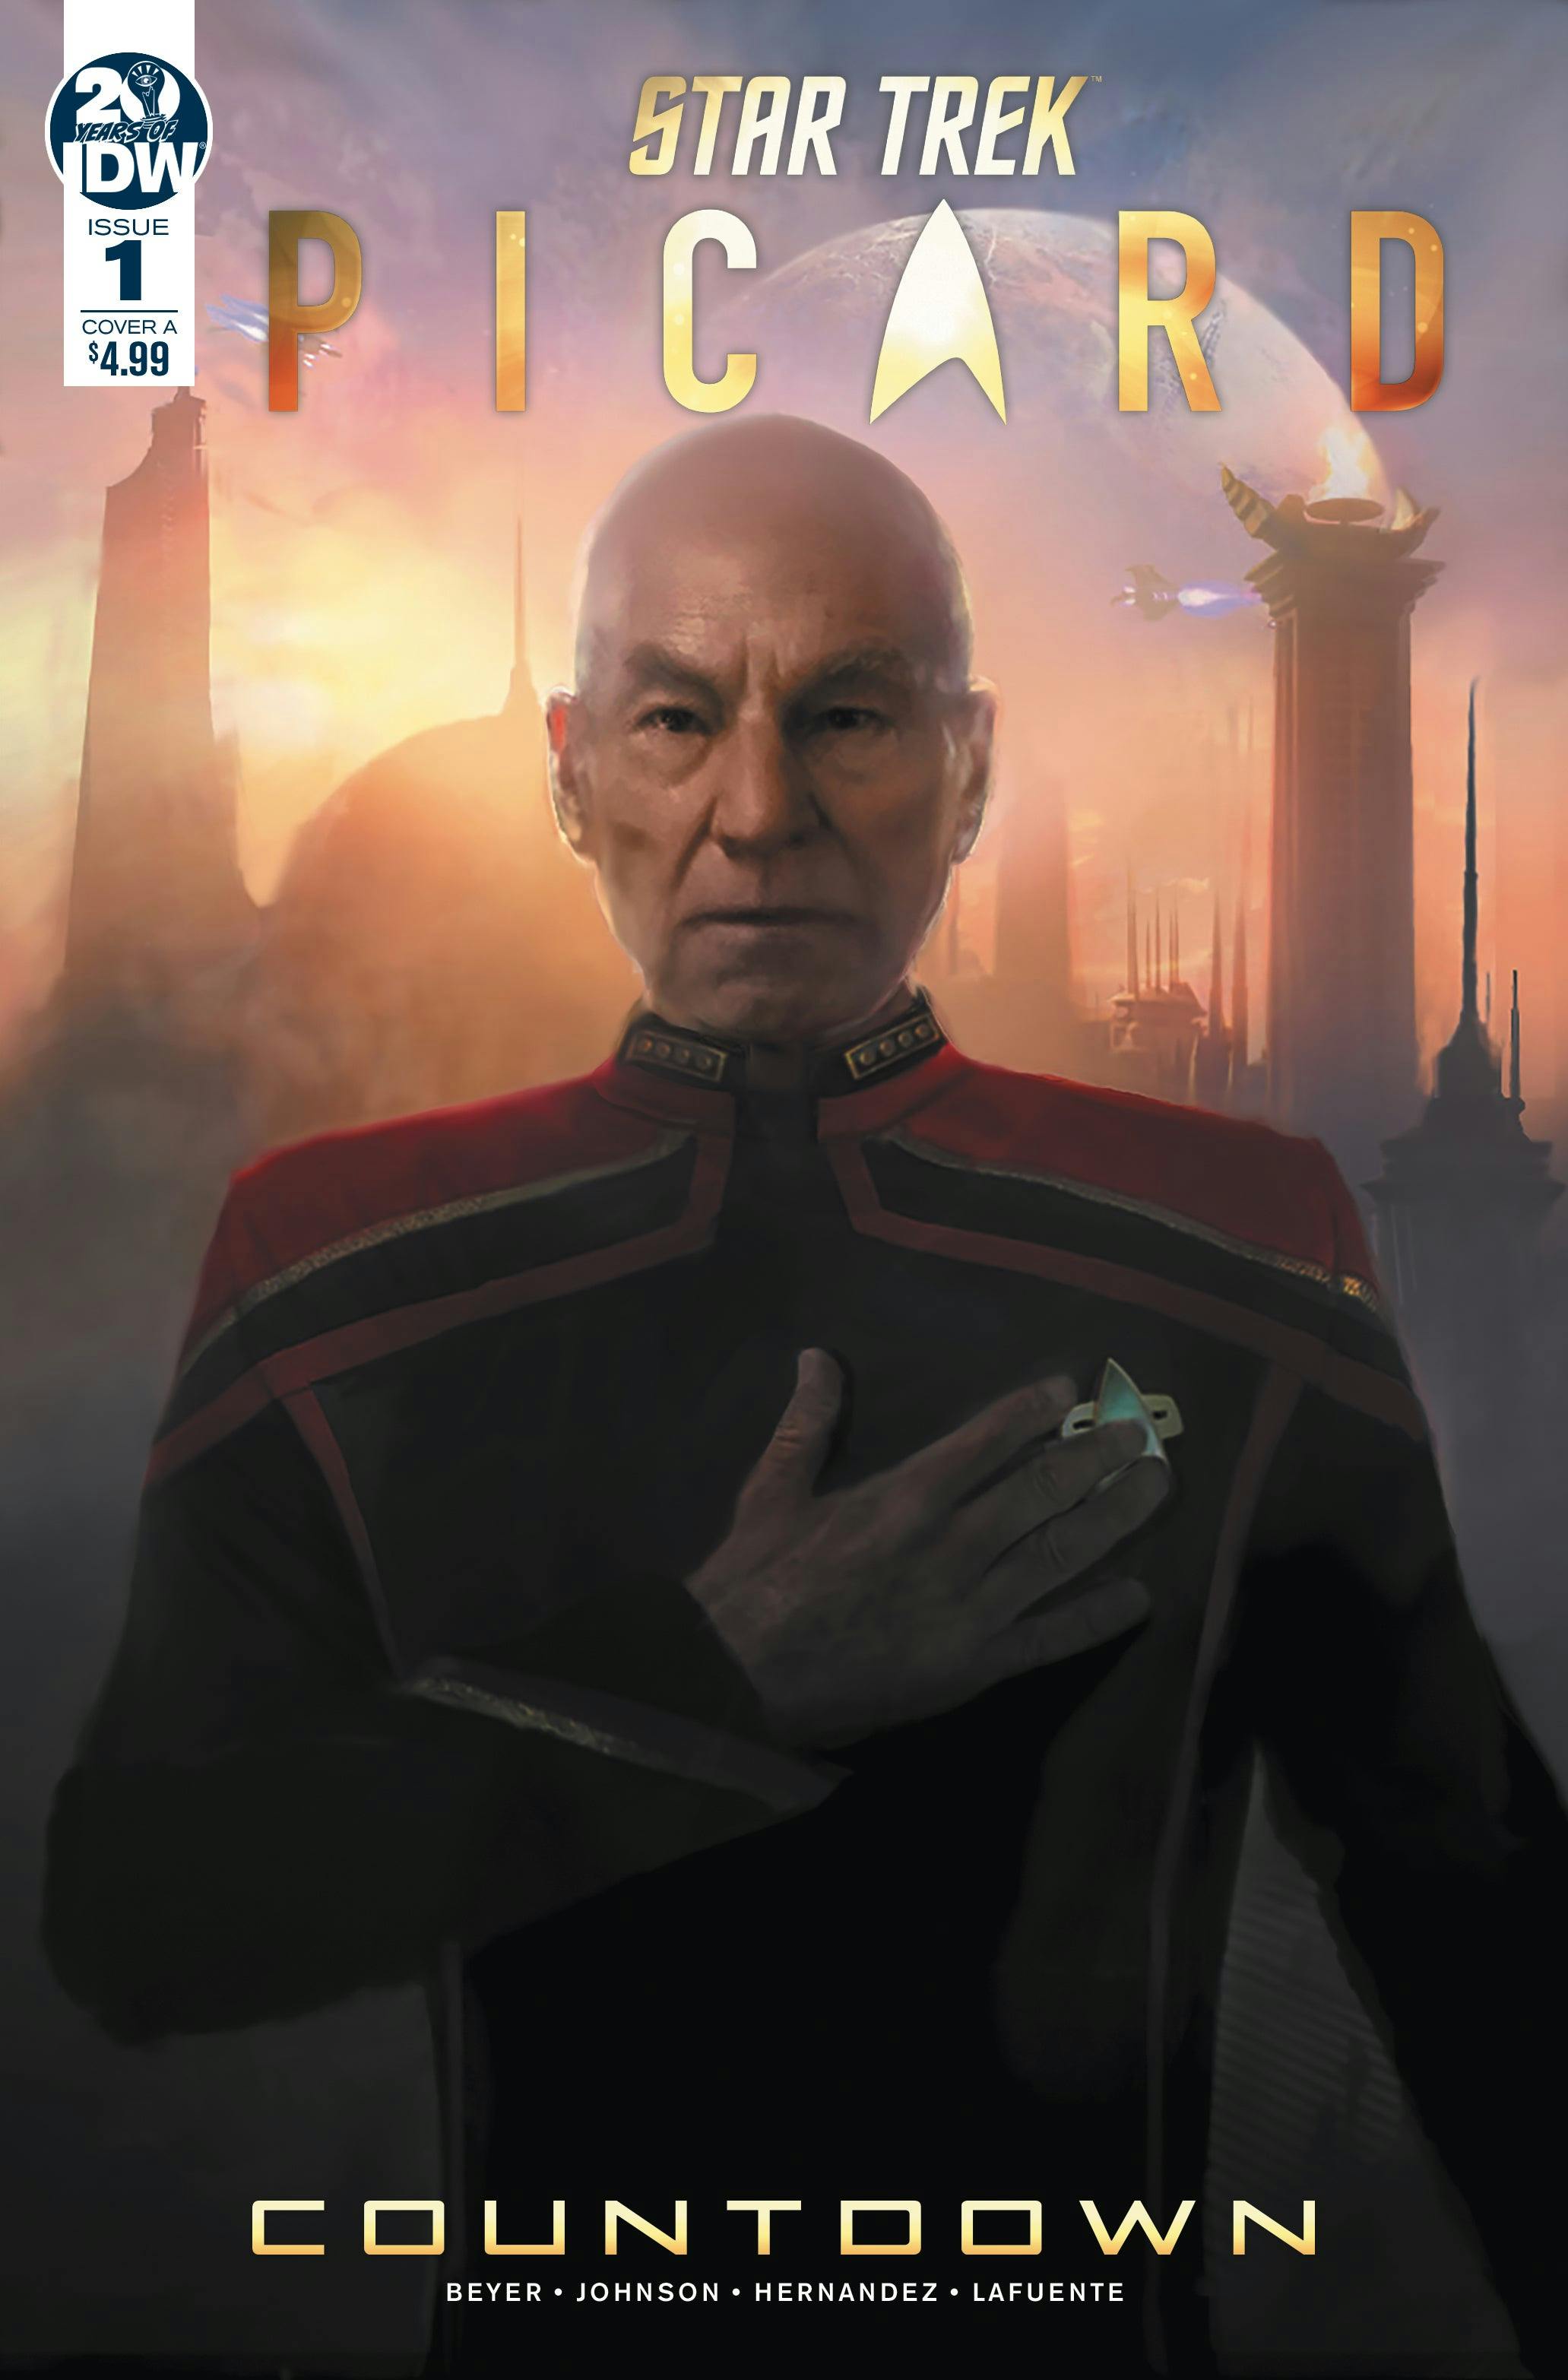 Star Trek: Picard - Countdown